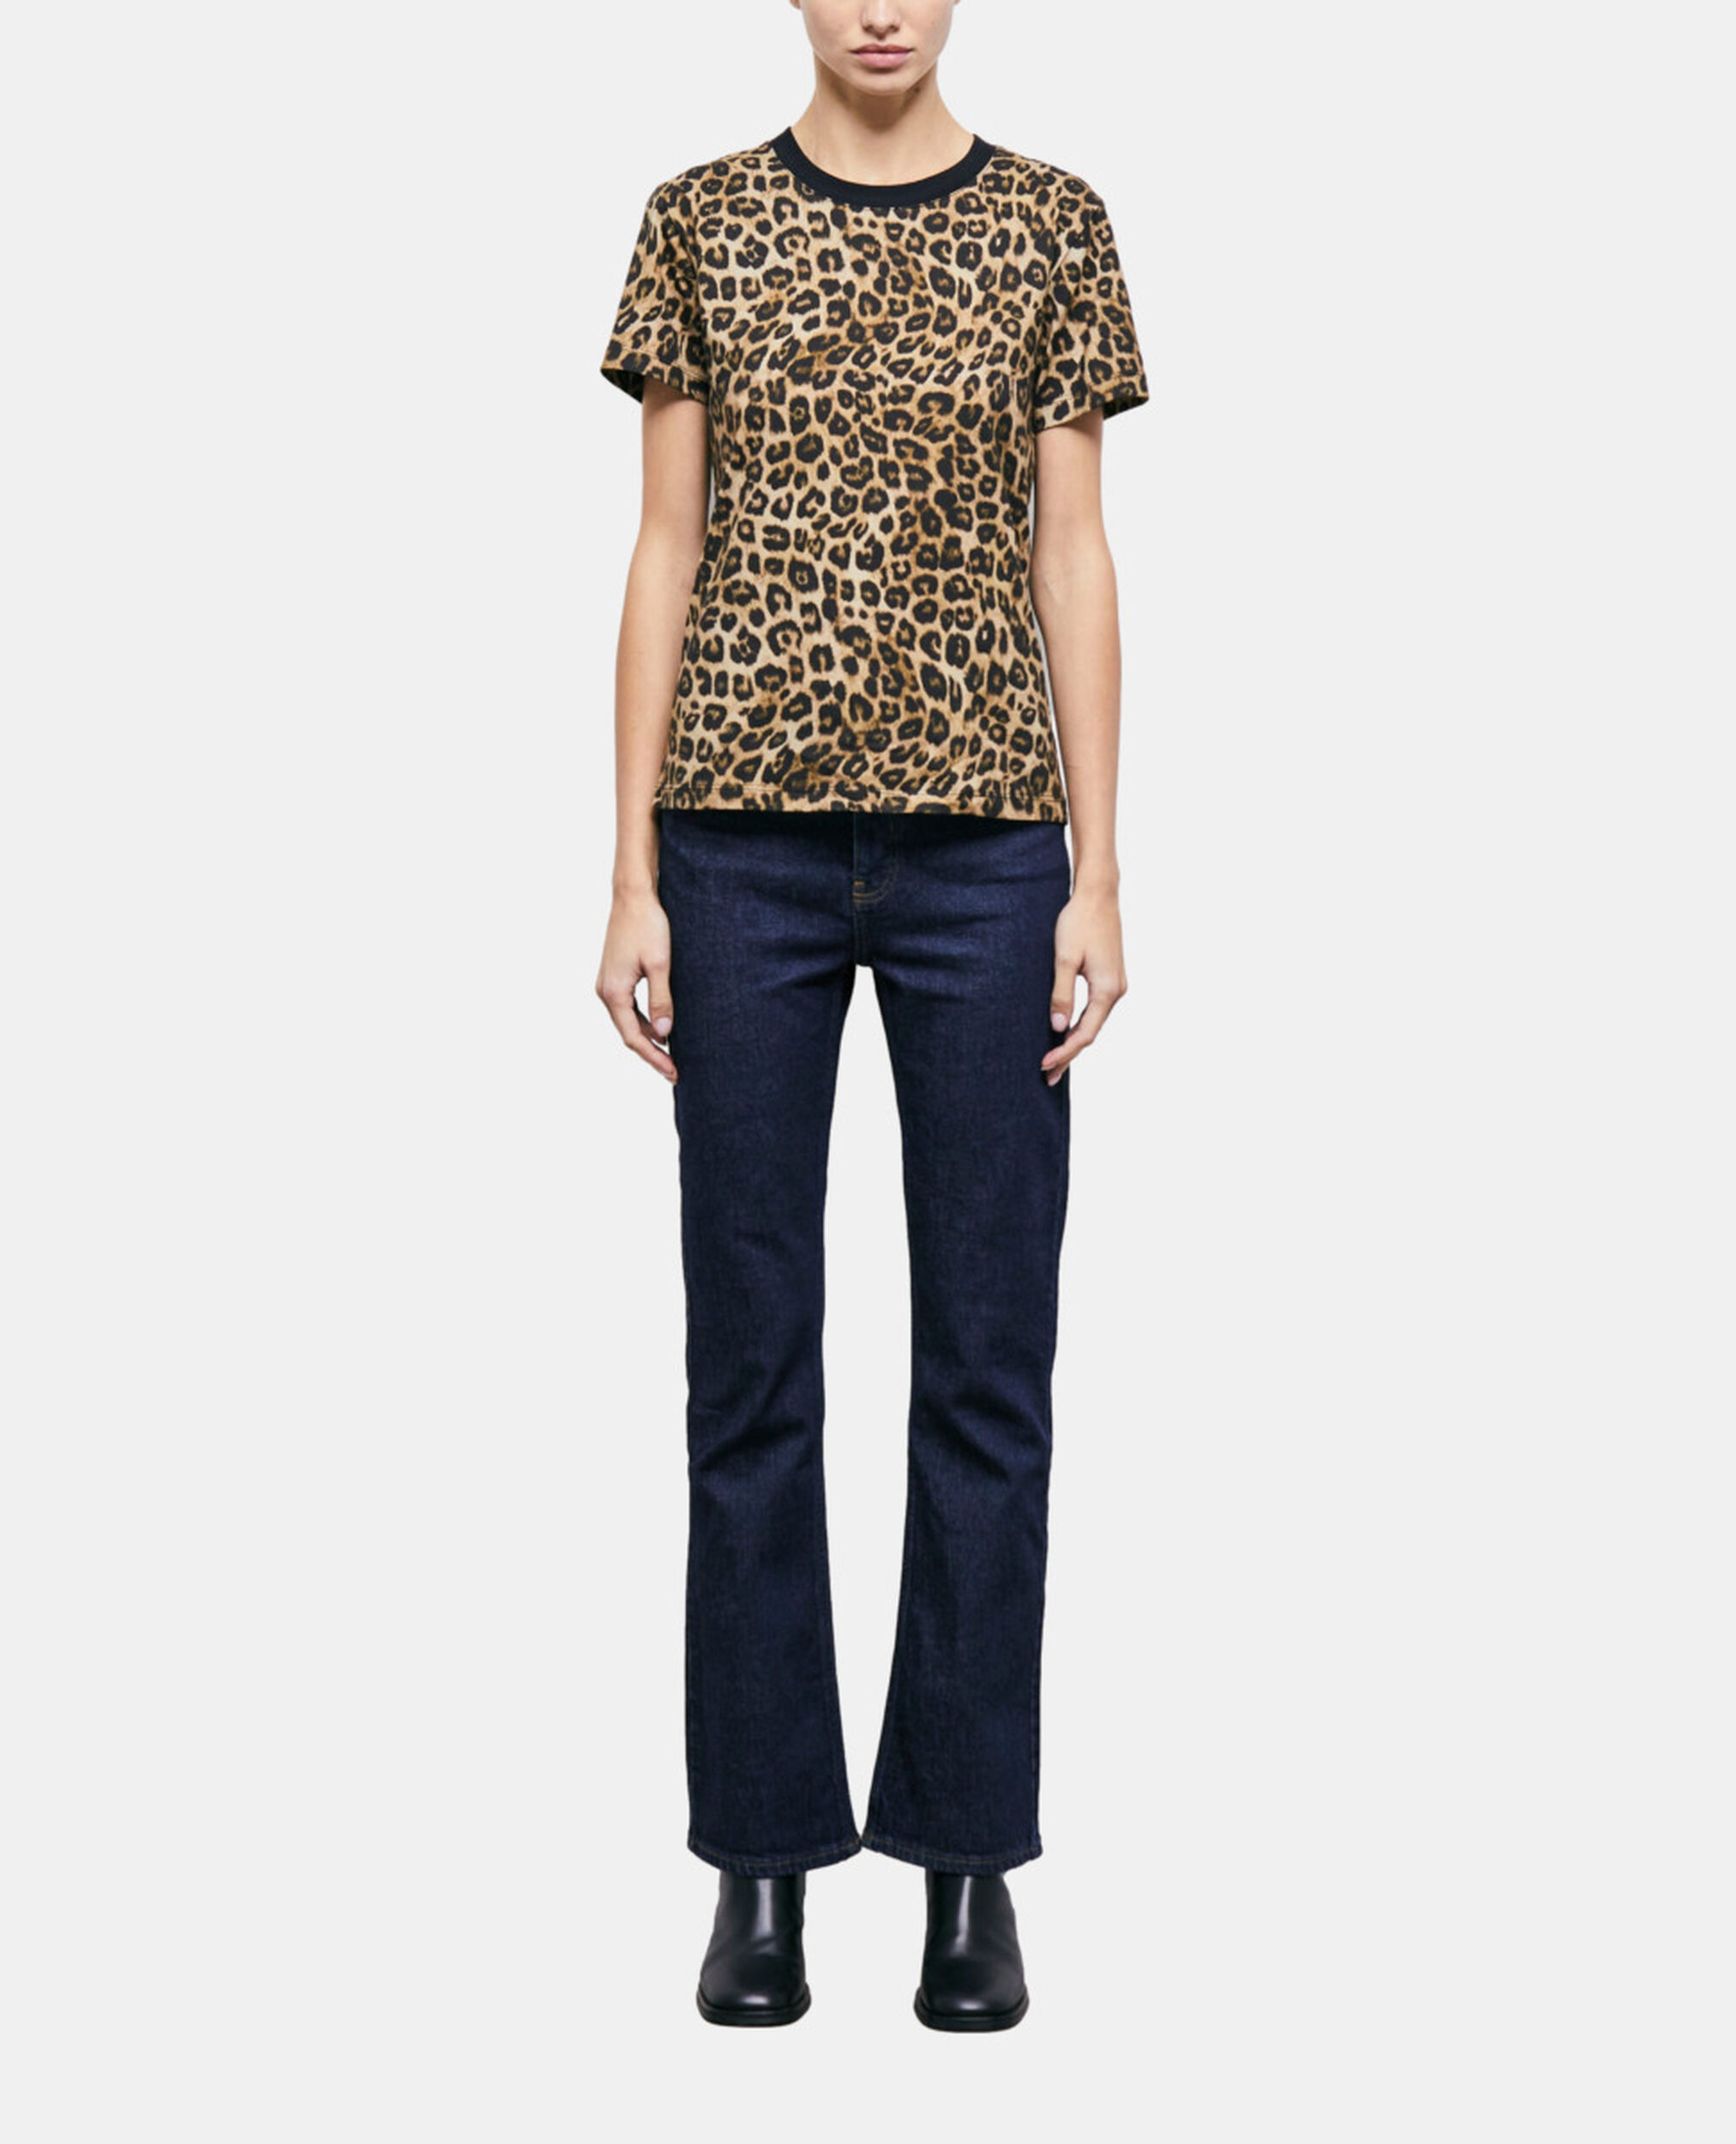 Women's leopard print t-shirt, LEOPARD, hi-res image number null